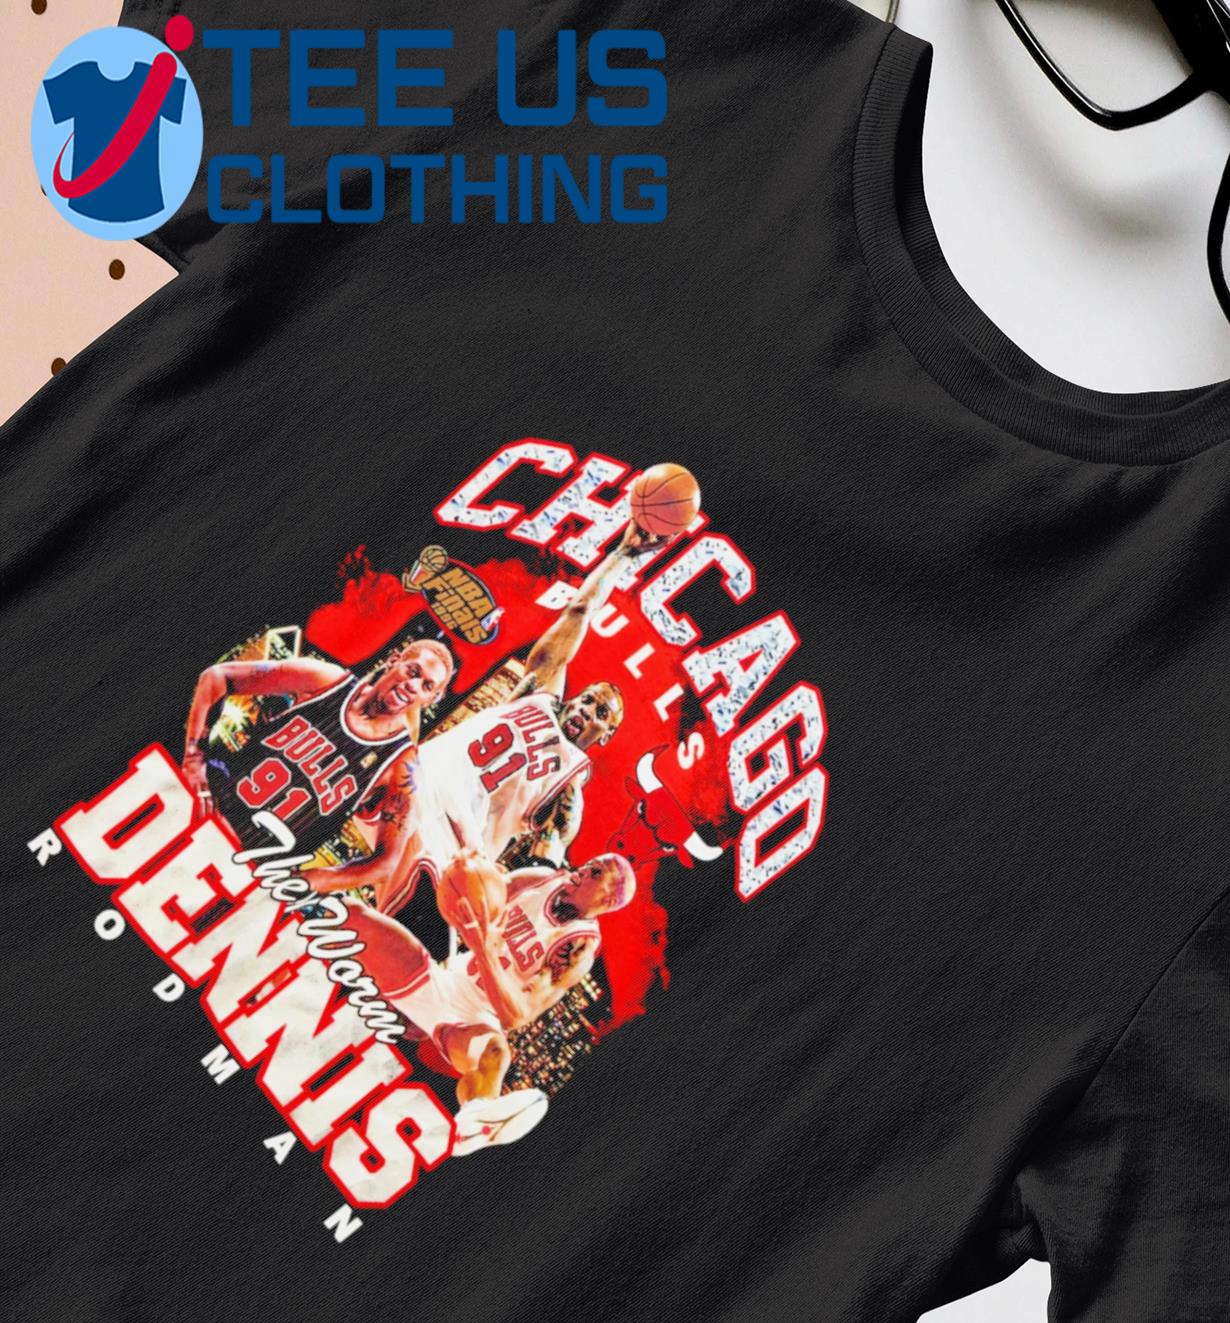 Dennis Rodman Chicago Bulls Hardwood Classics Bling Concert Player 2023  Shirt - Limotees